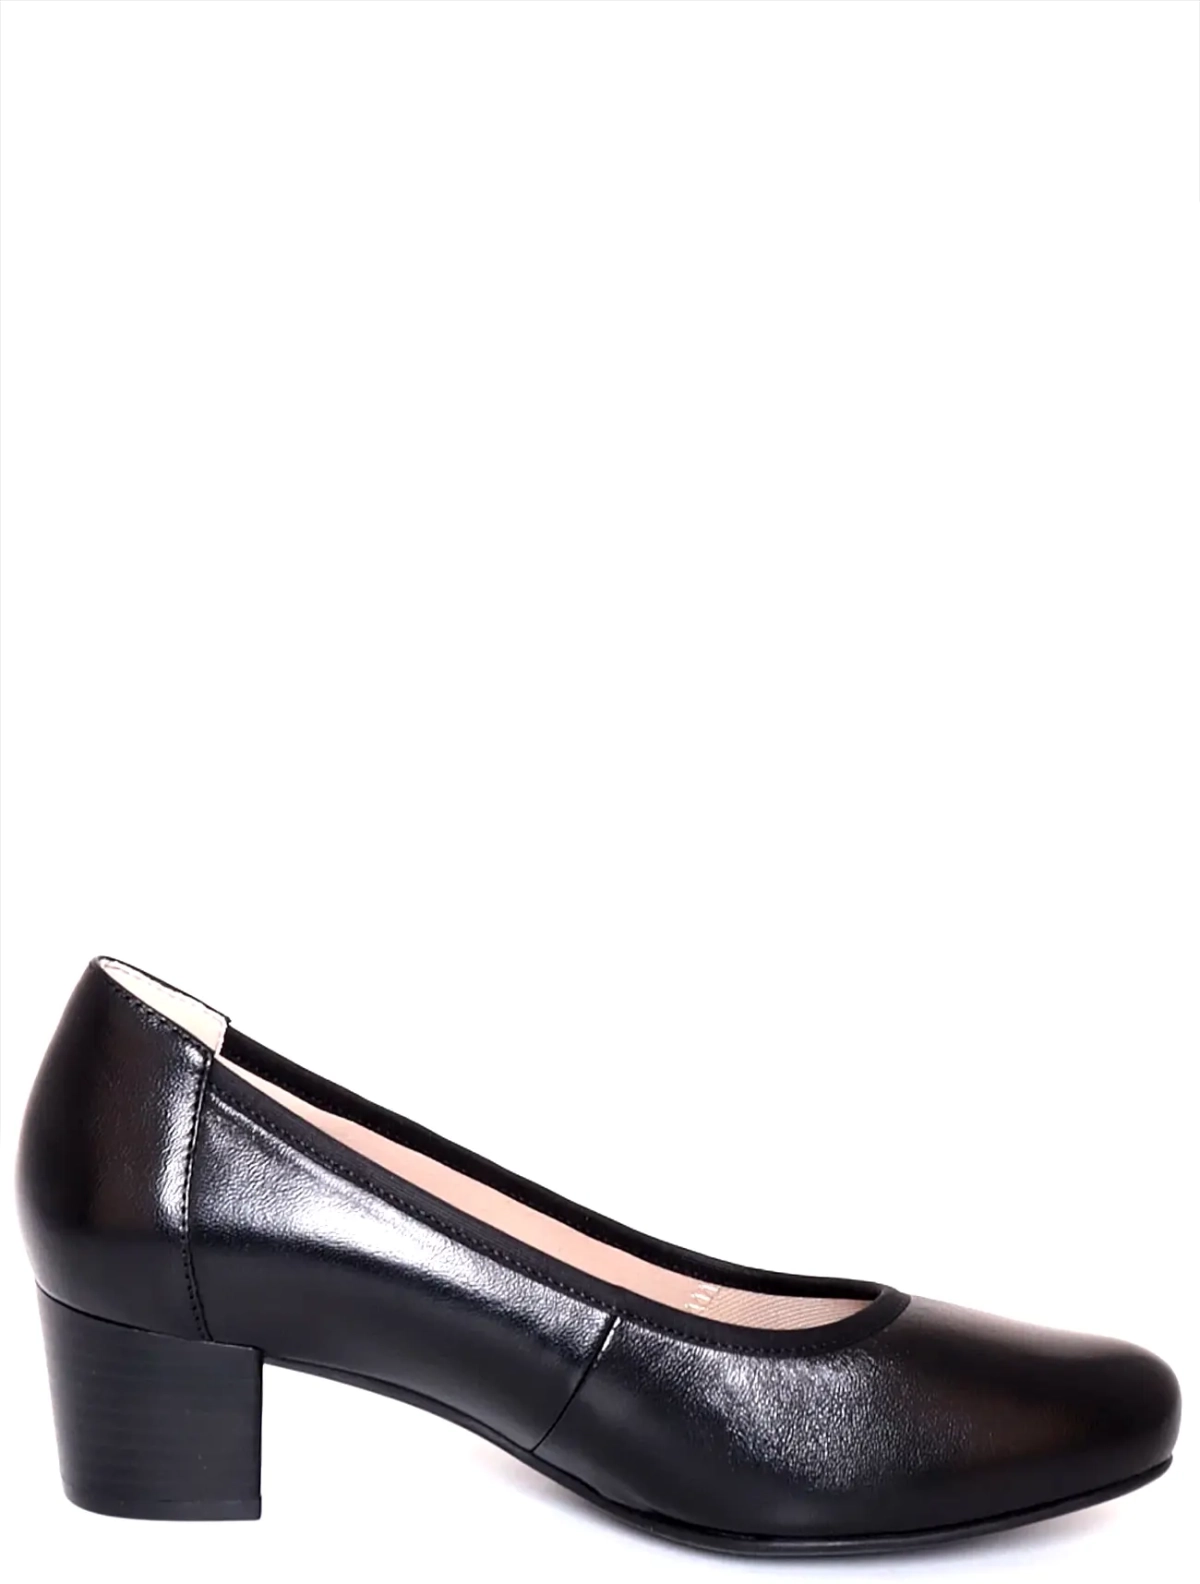 Caprice 9-22308-42-022 женские туфли